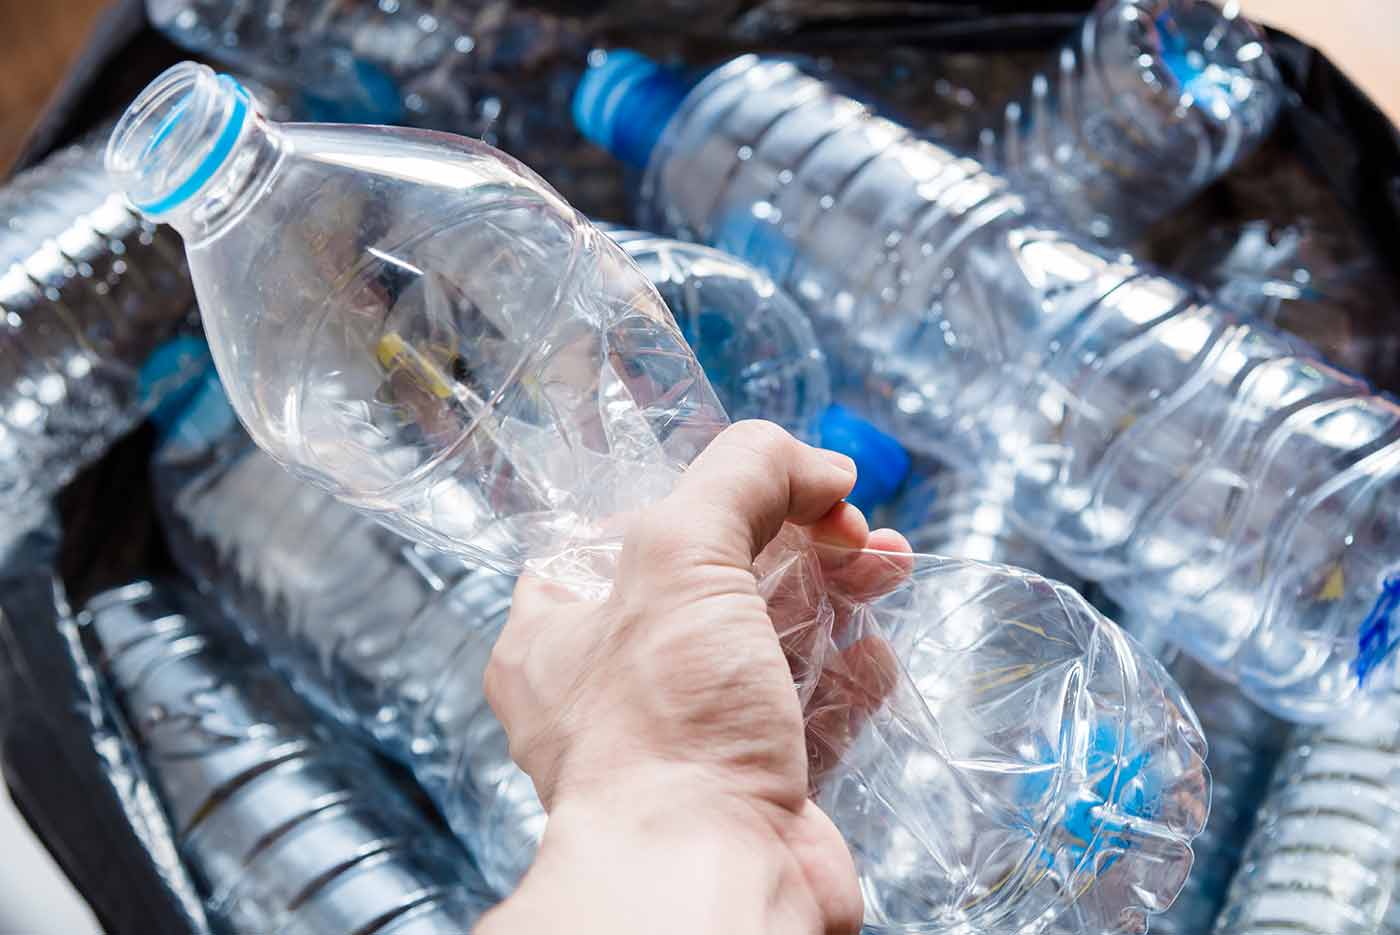 The Dangers of Plastic Water Bottles